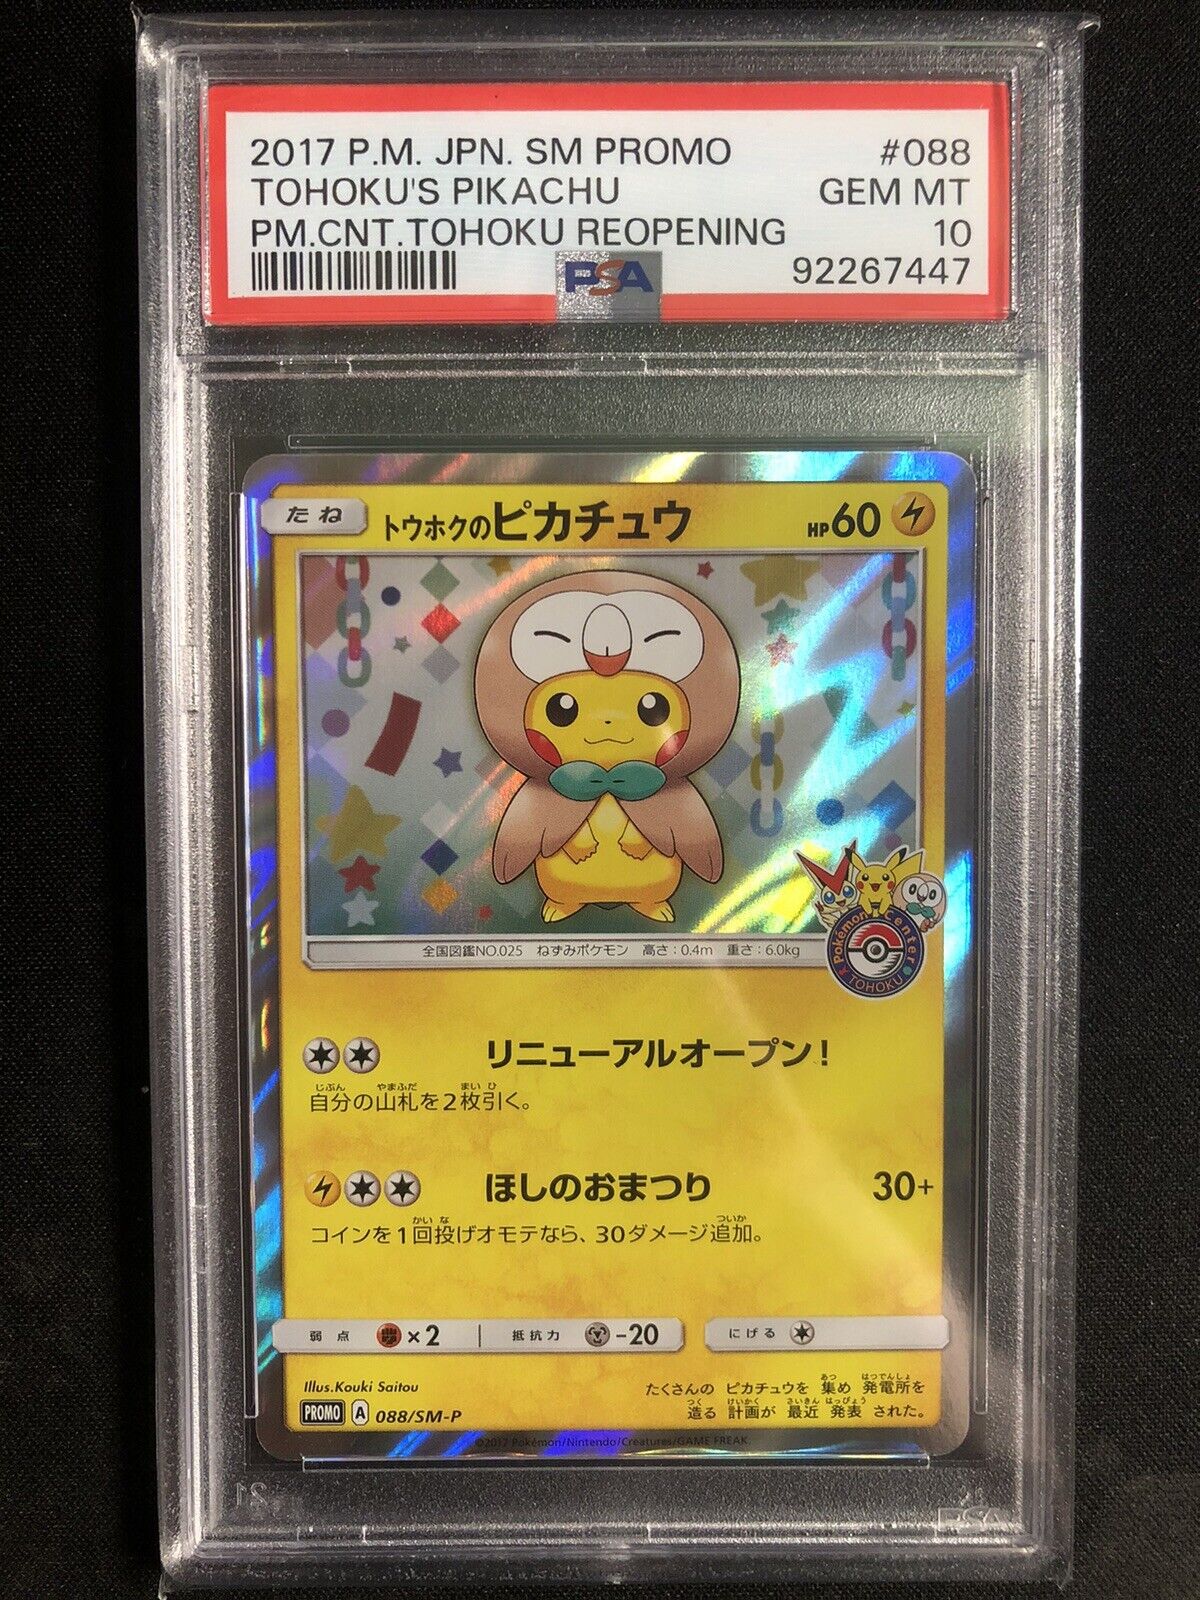 PSA 10 Card Tohoku's Pikachu Pokemon Center Reopening Promo 088/SM-P GEM MINT